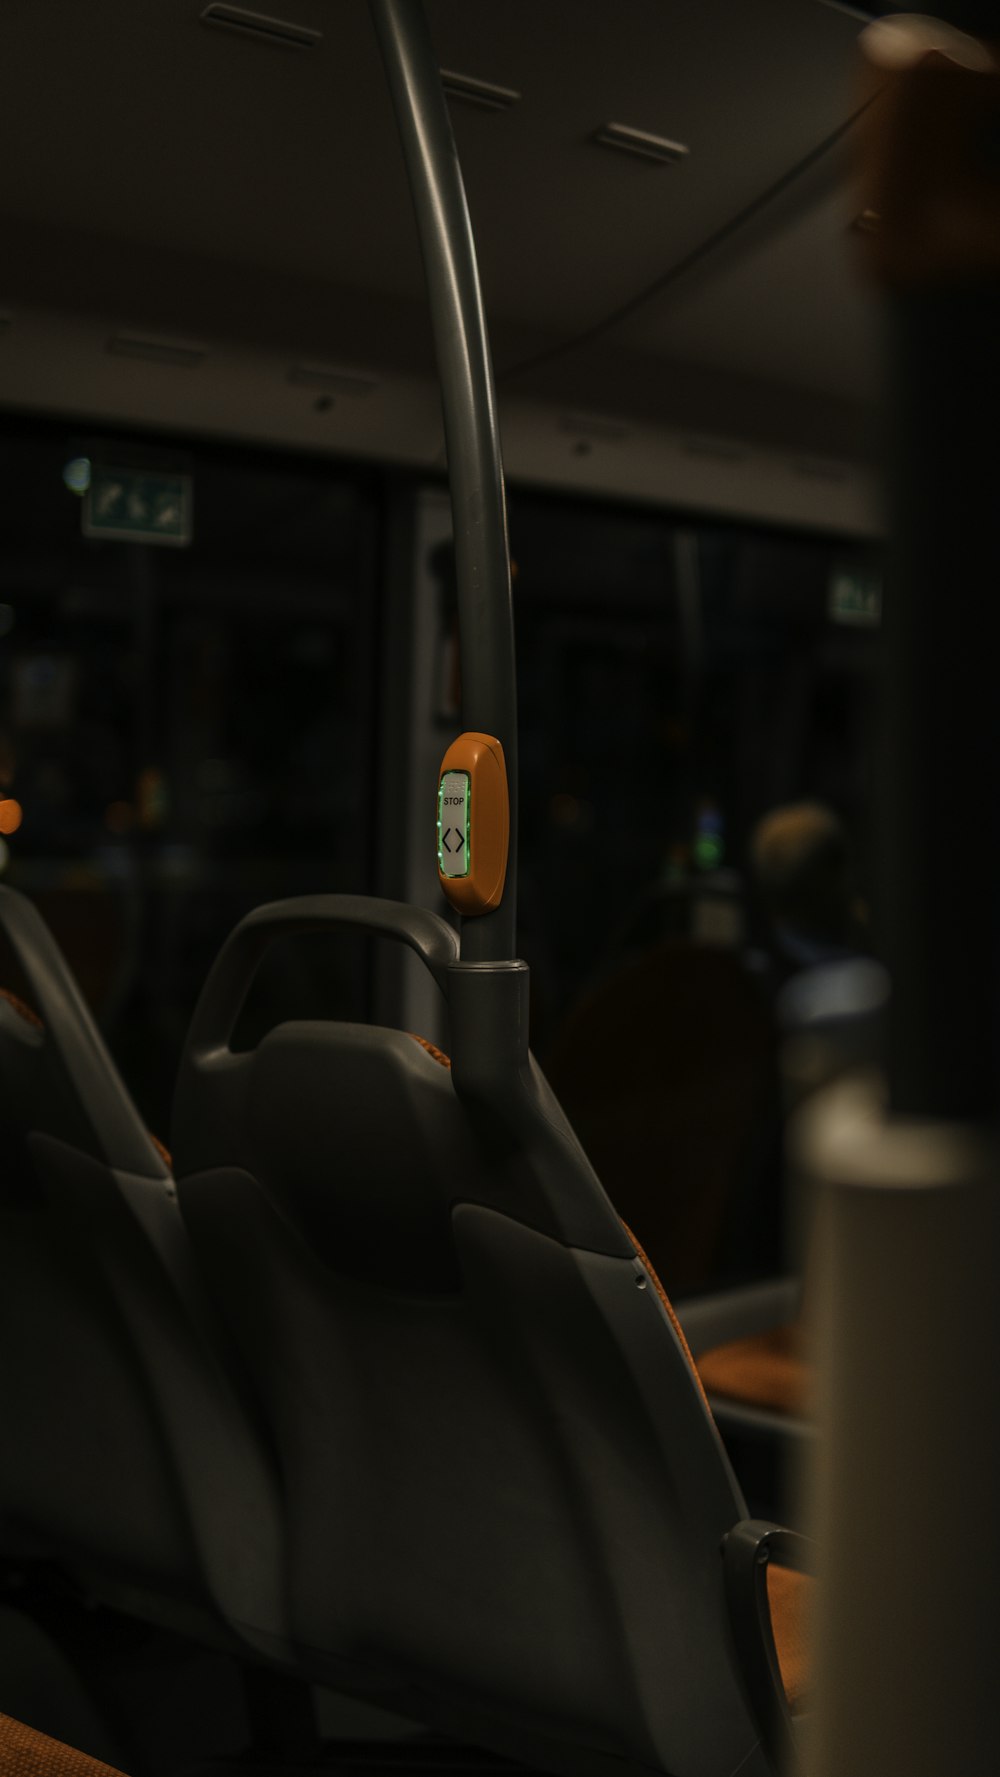 a close up of a public transit bus